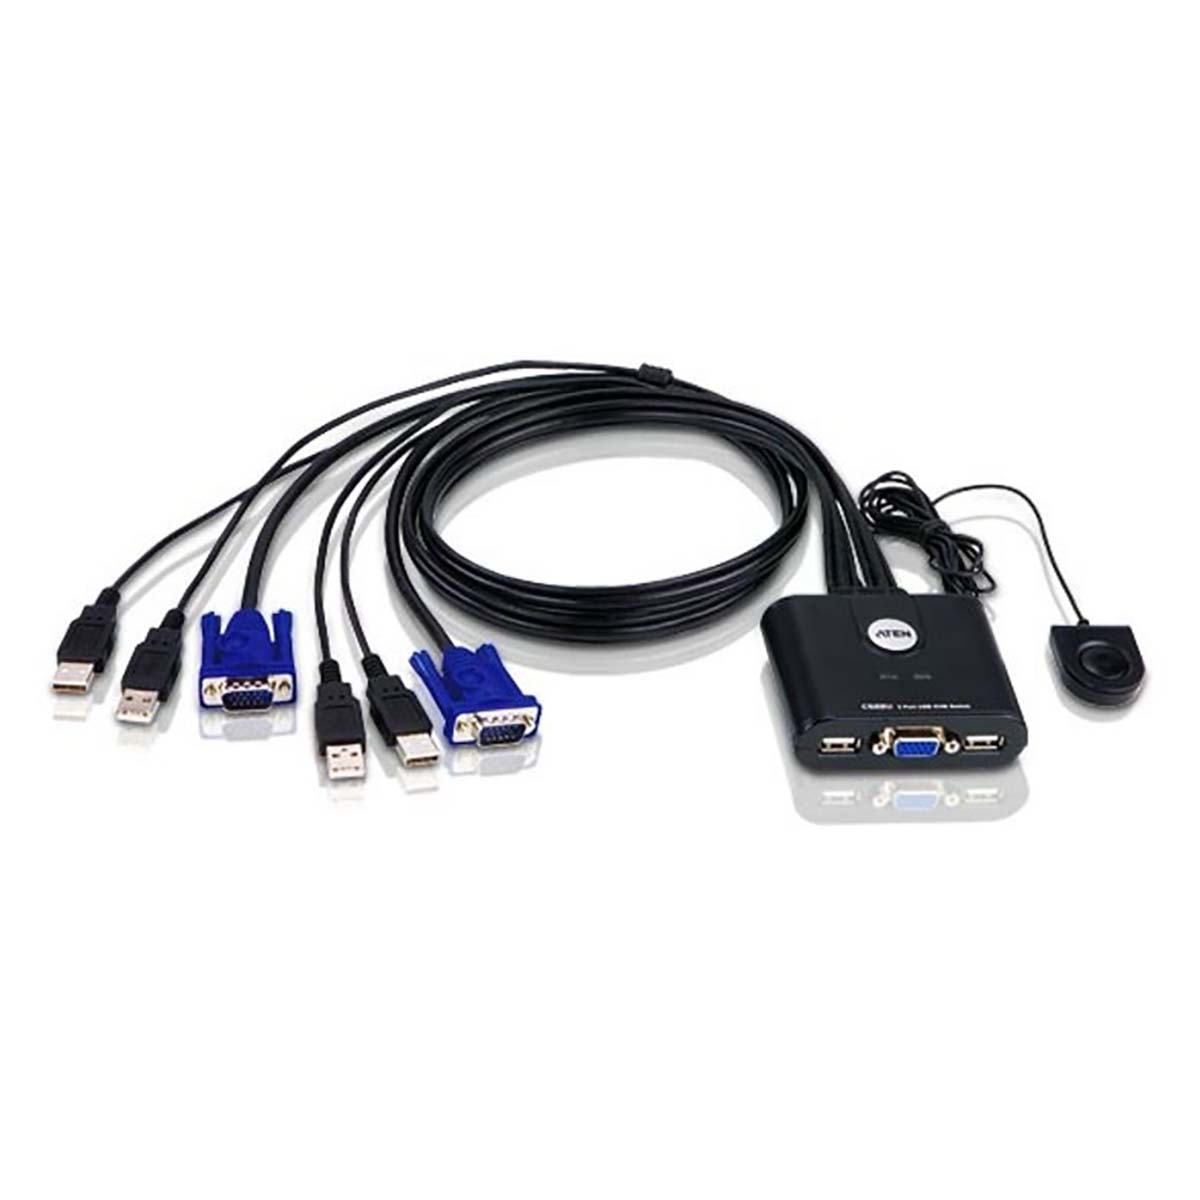 Aten2-port USB VGA Cable KVM Switch with Remote Port SelectorArticle-No: CS22U-ATL